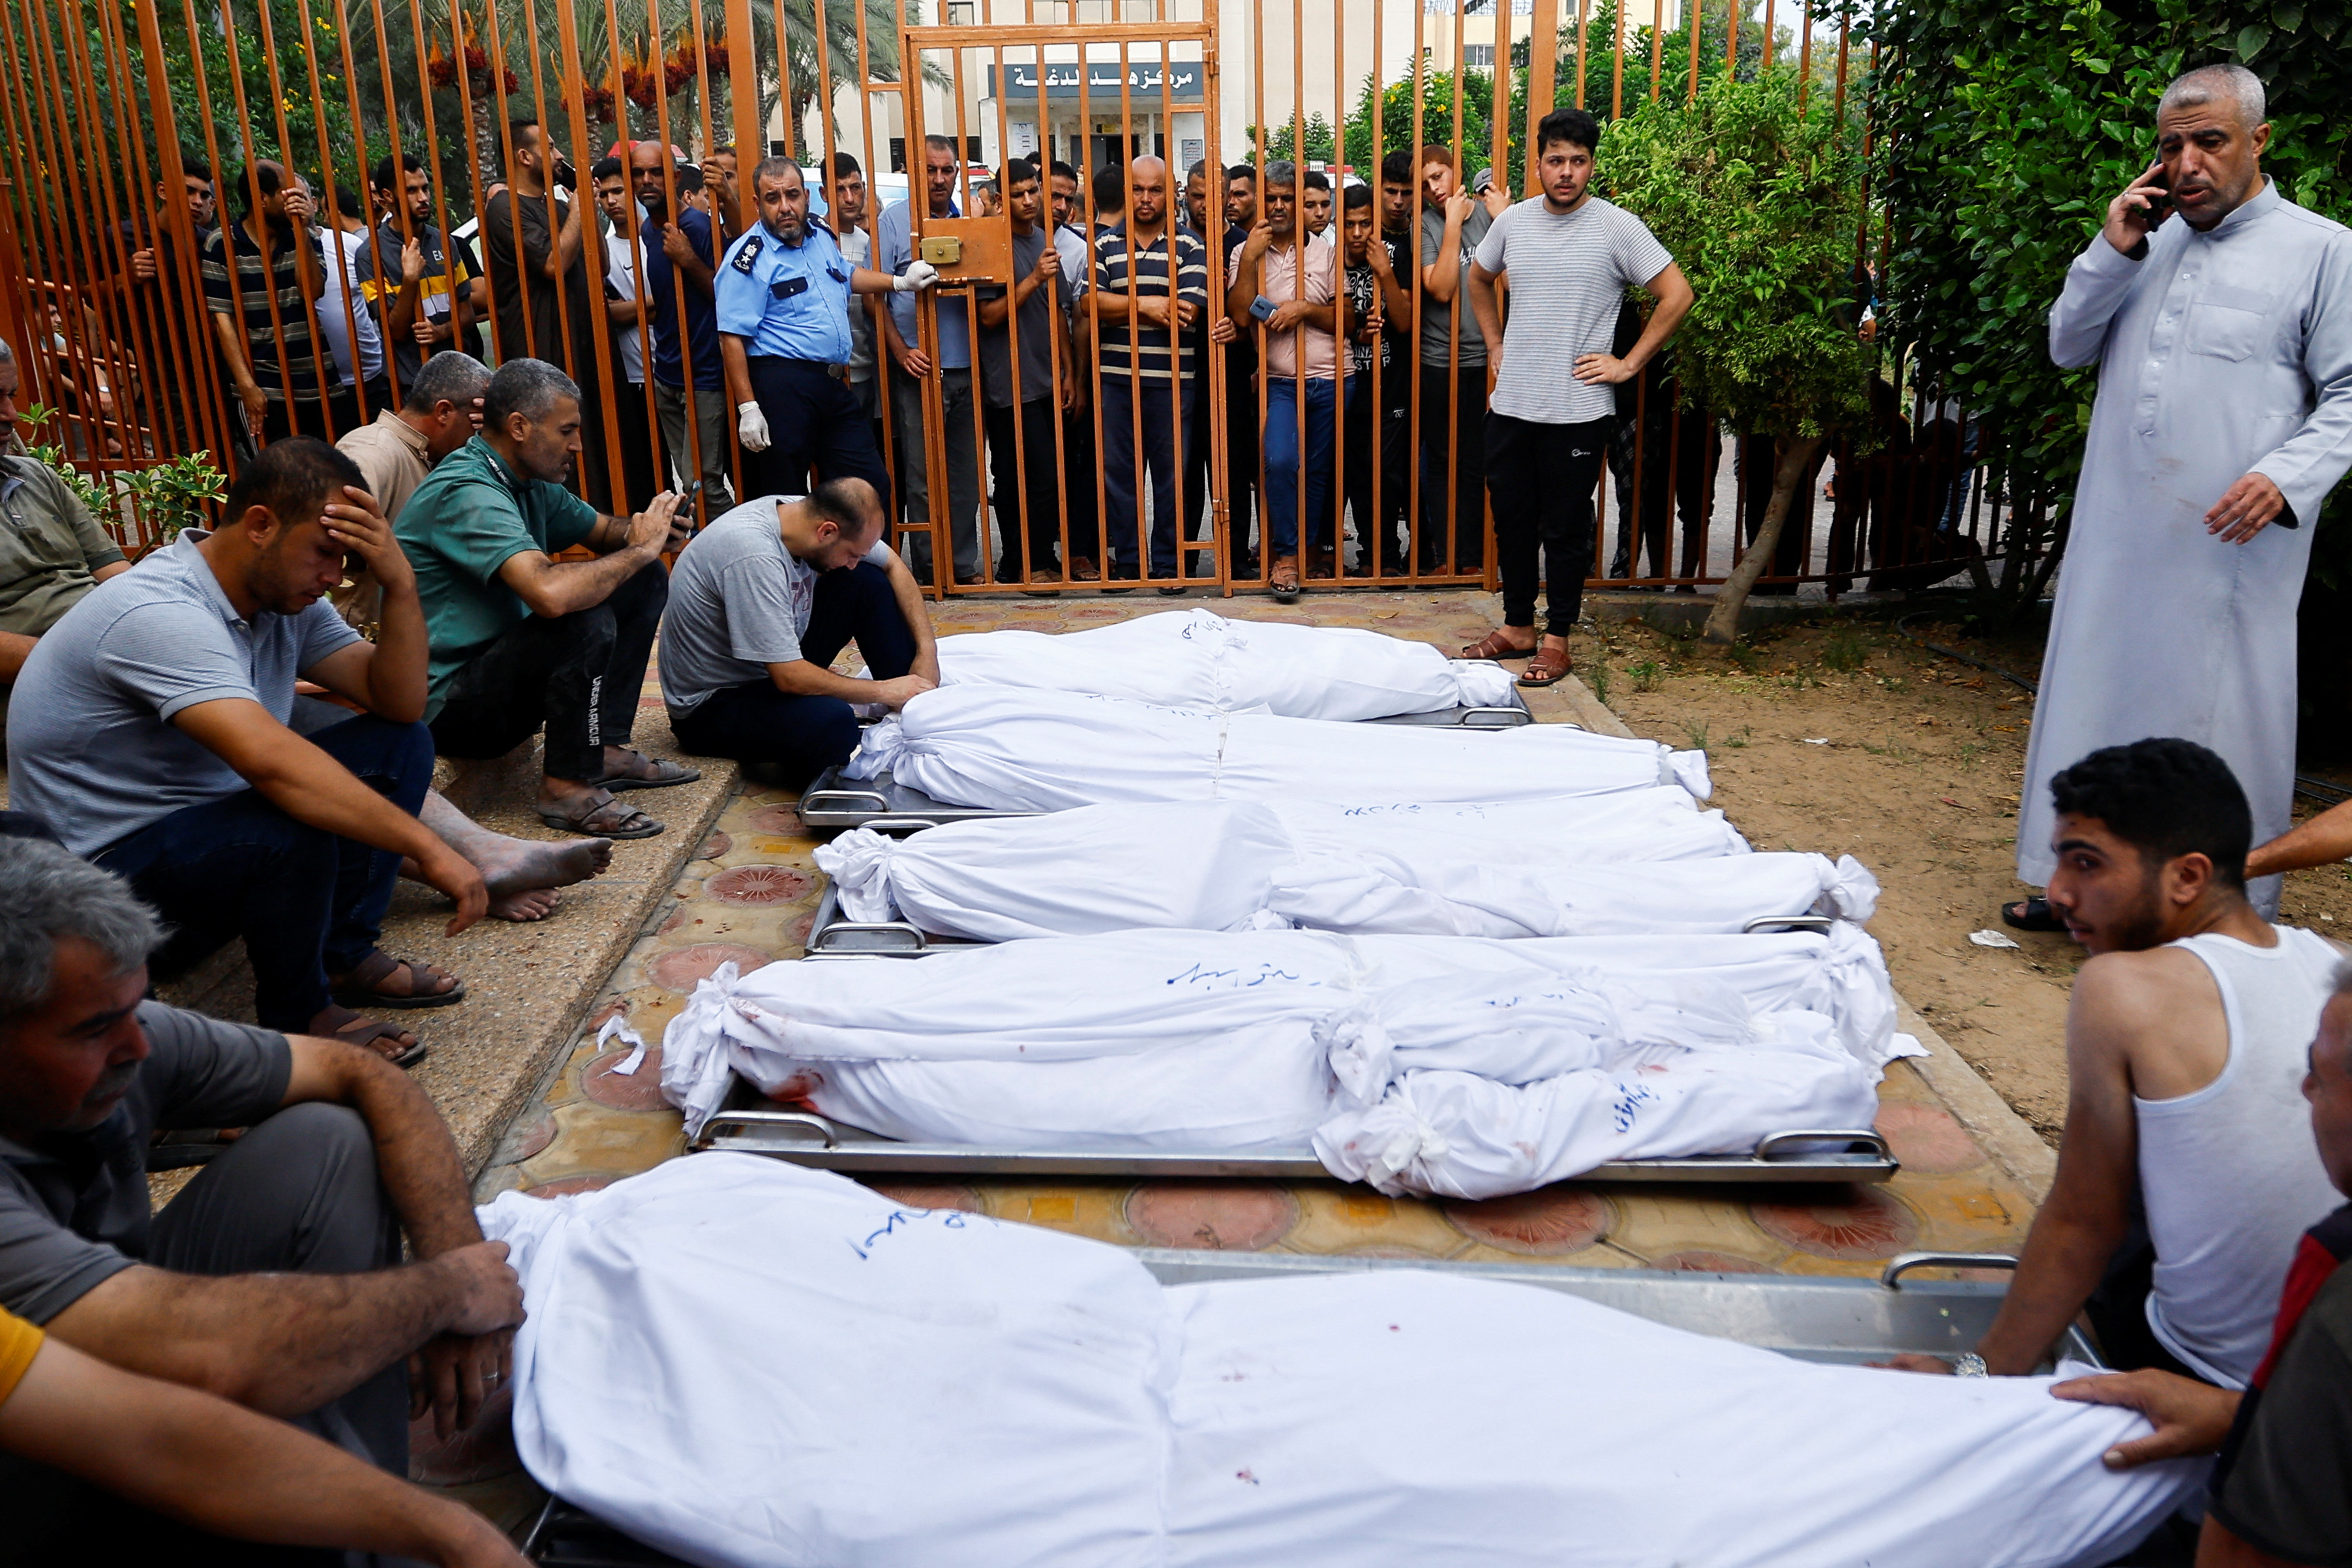 Funeral of Palestinian members of al-Agha family